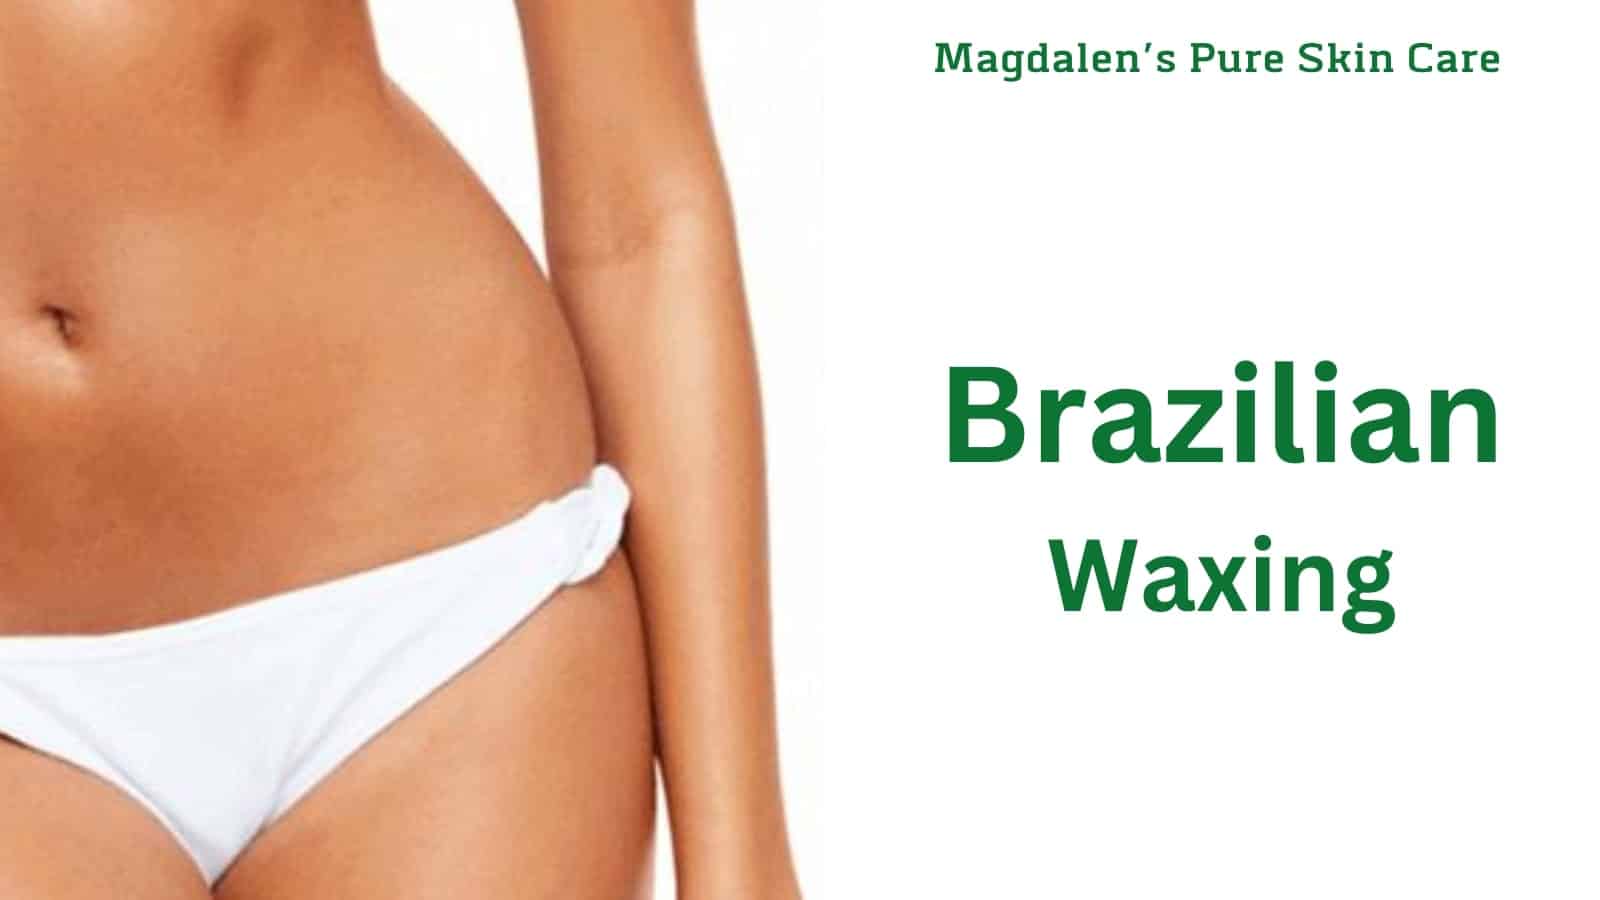 Brazilian waxing services